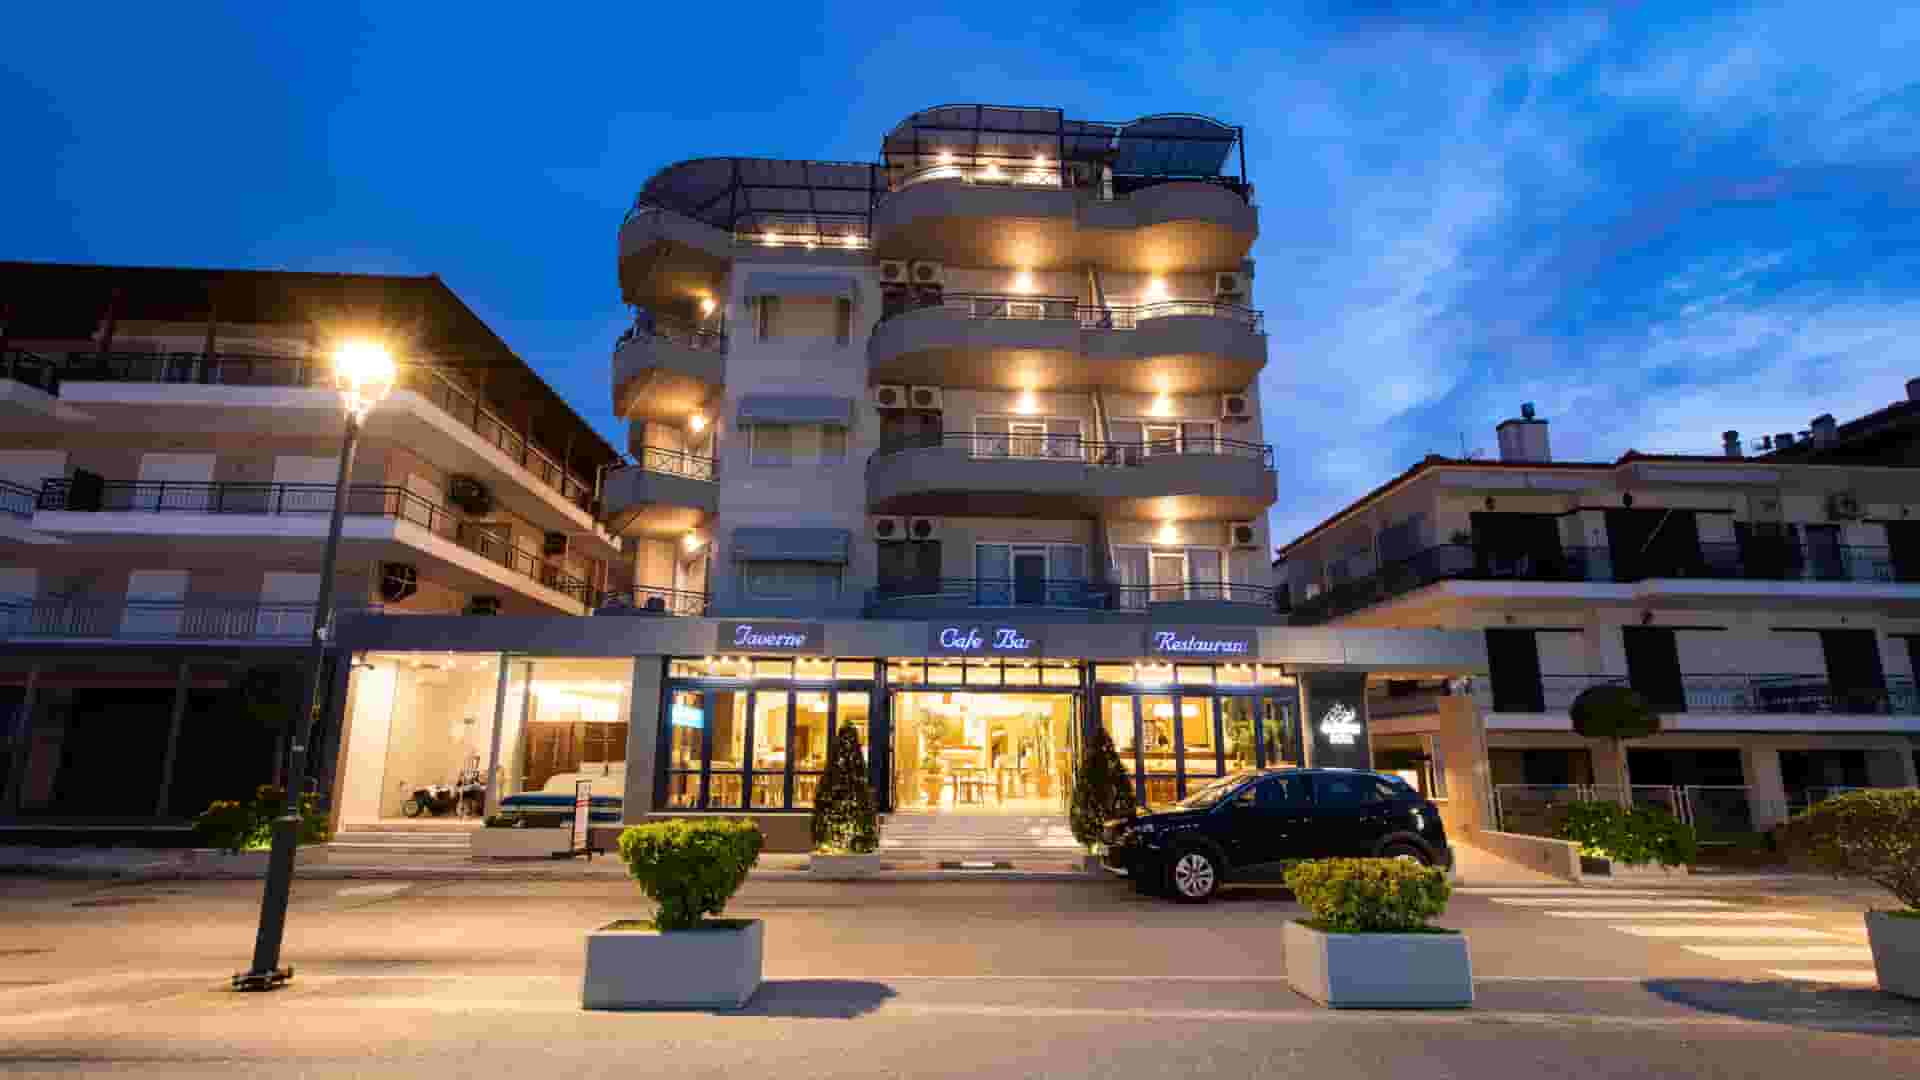 Olympic Star Hotel - Hotel in Neoi Poroi, Pieria | Olympic Star Hotel ...